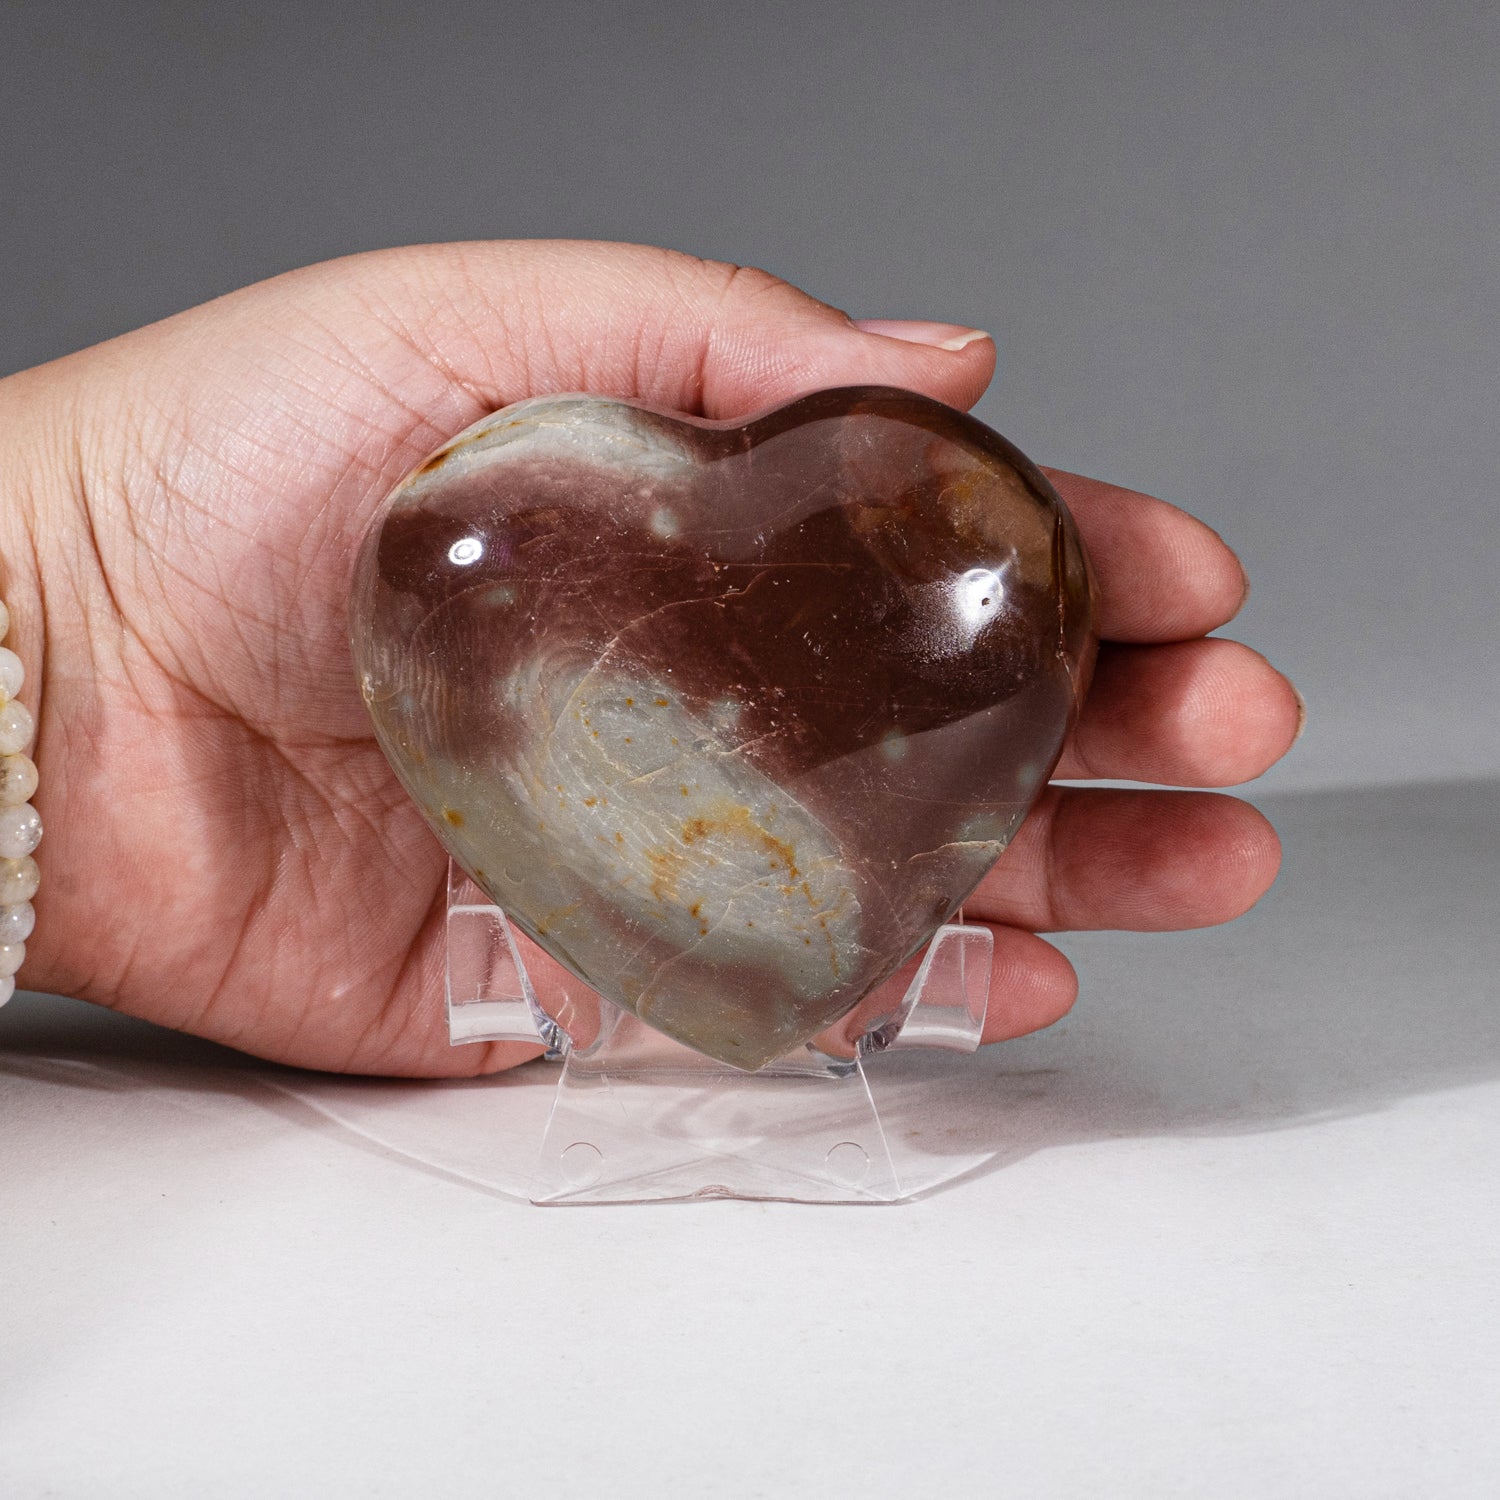 Genuine Polished Polychrome Jasper Heart from Madagascar (267 grams)